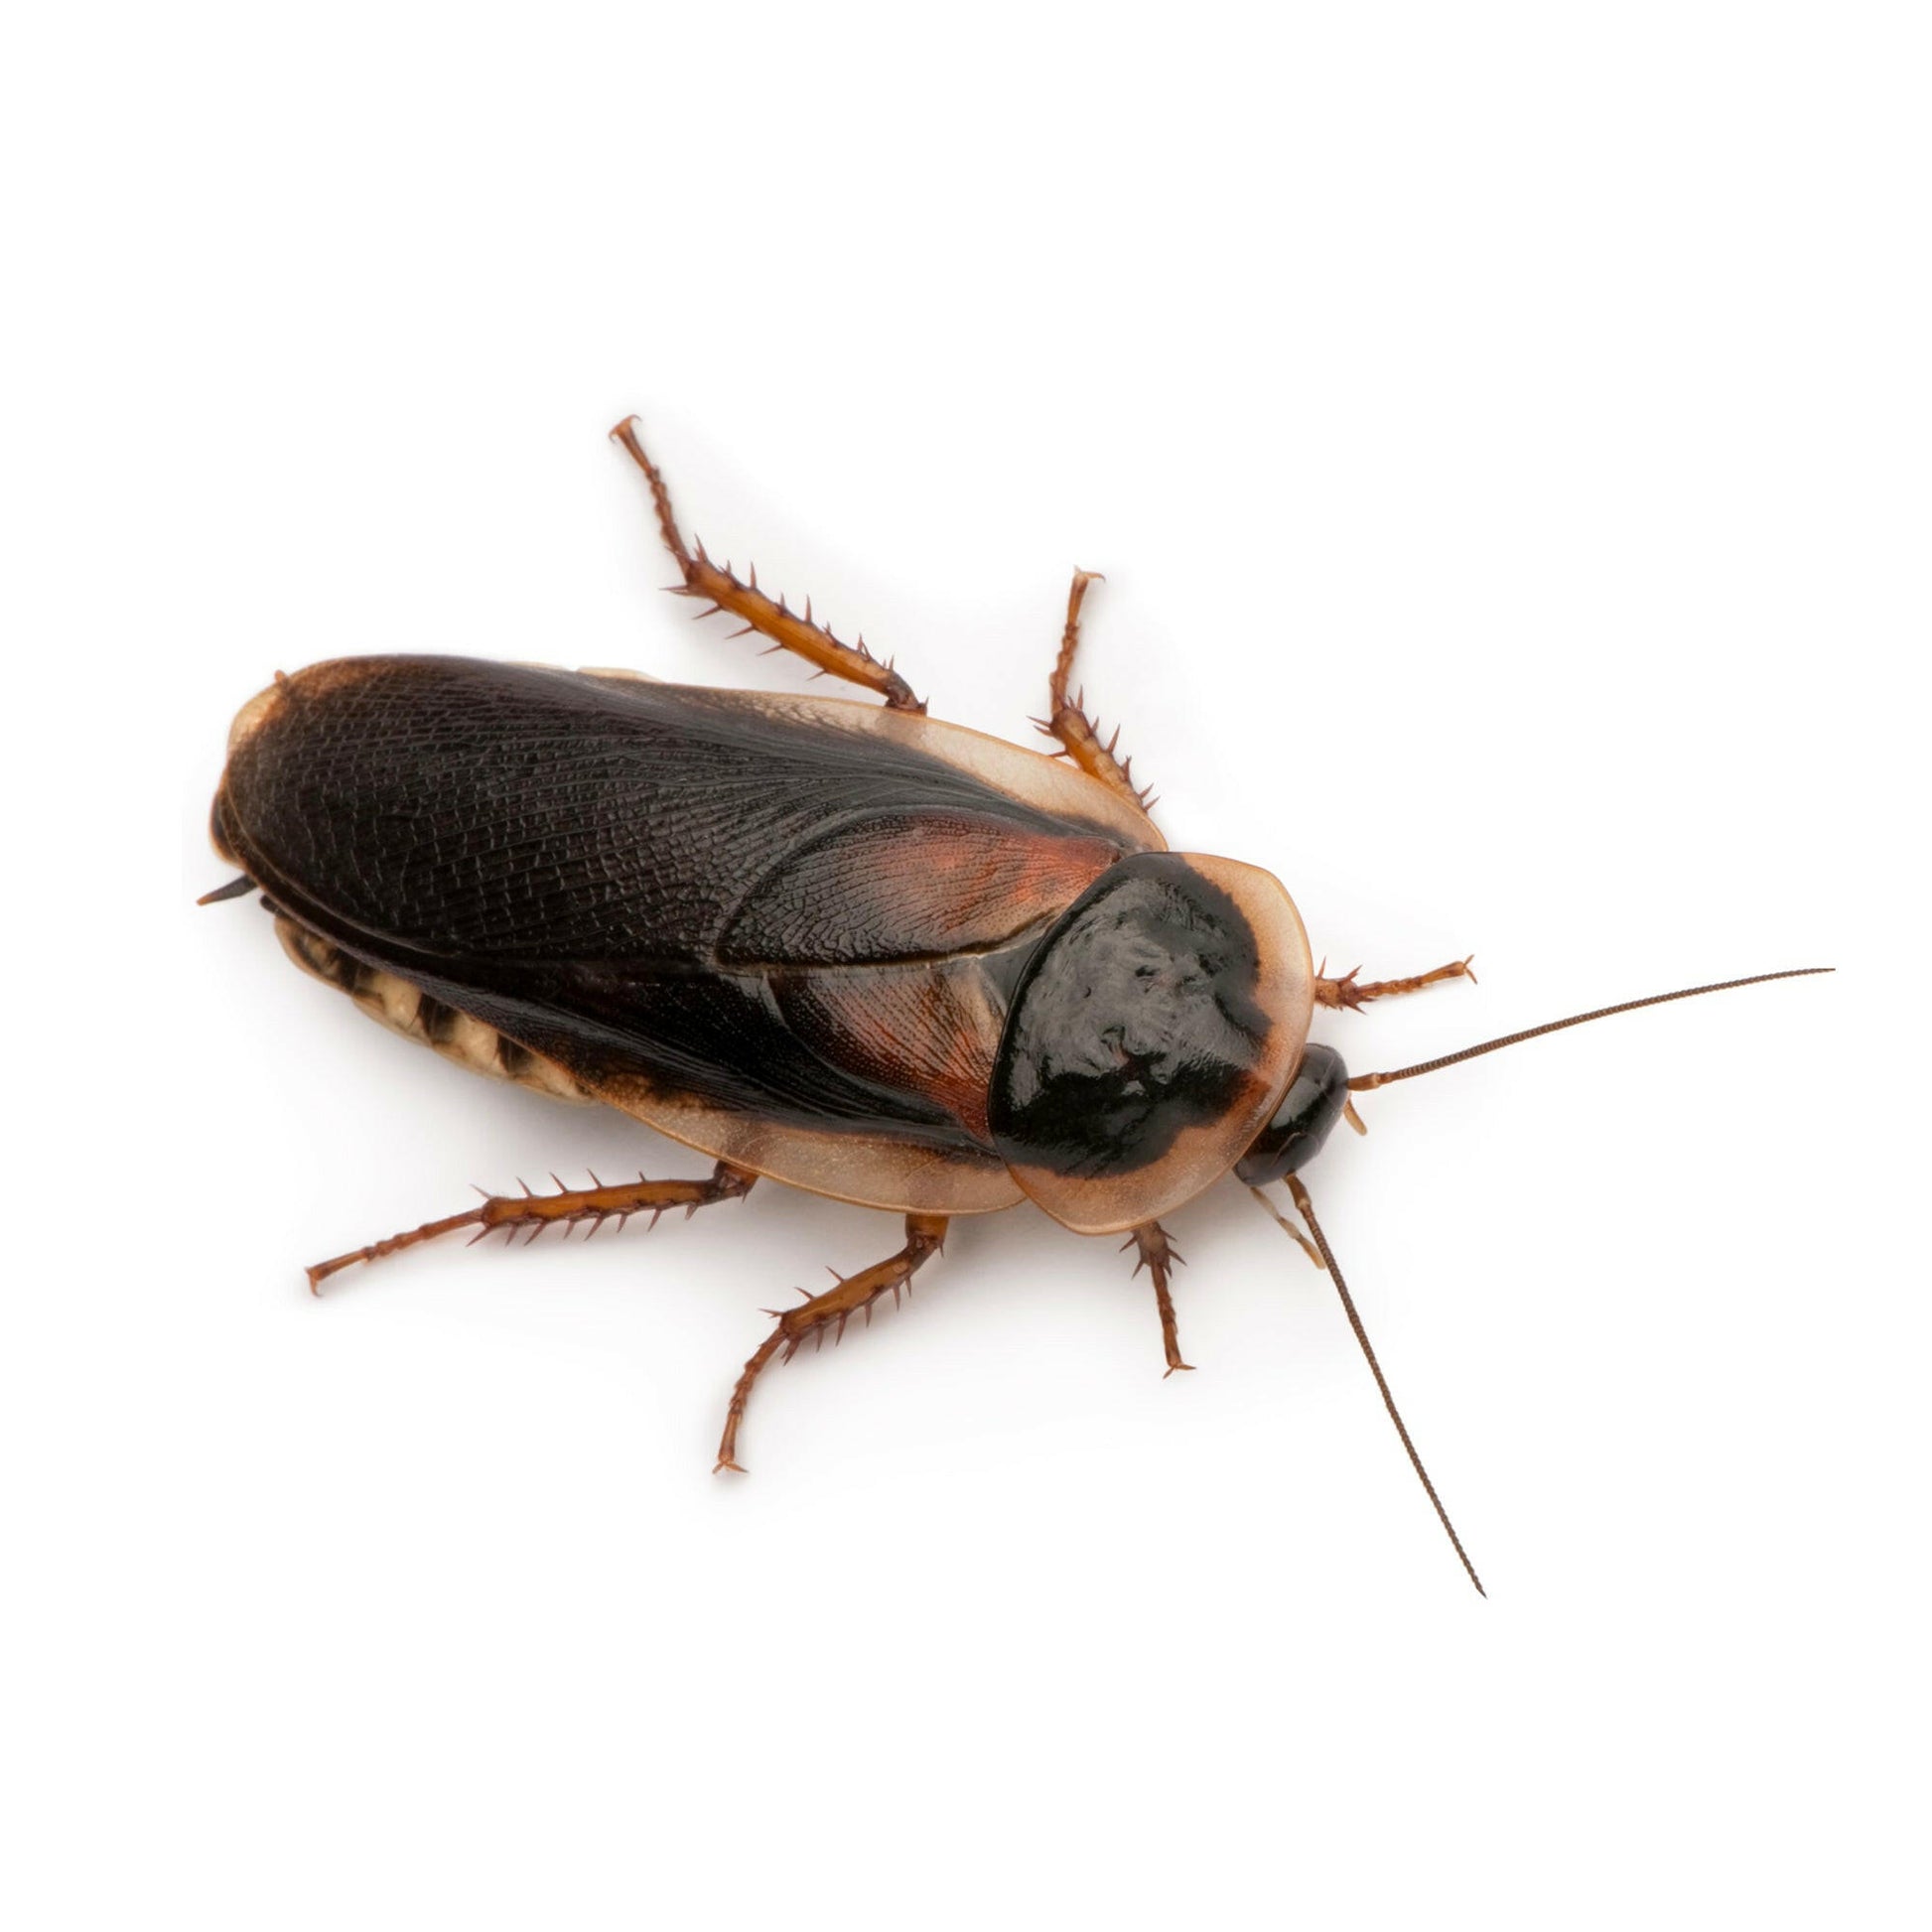 Adult Dubia Cockroaches 30-35mm - 6 Pack - Charterhouse Aquatics